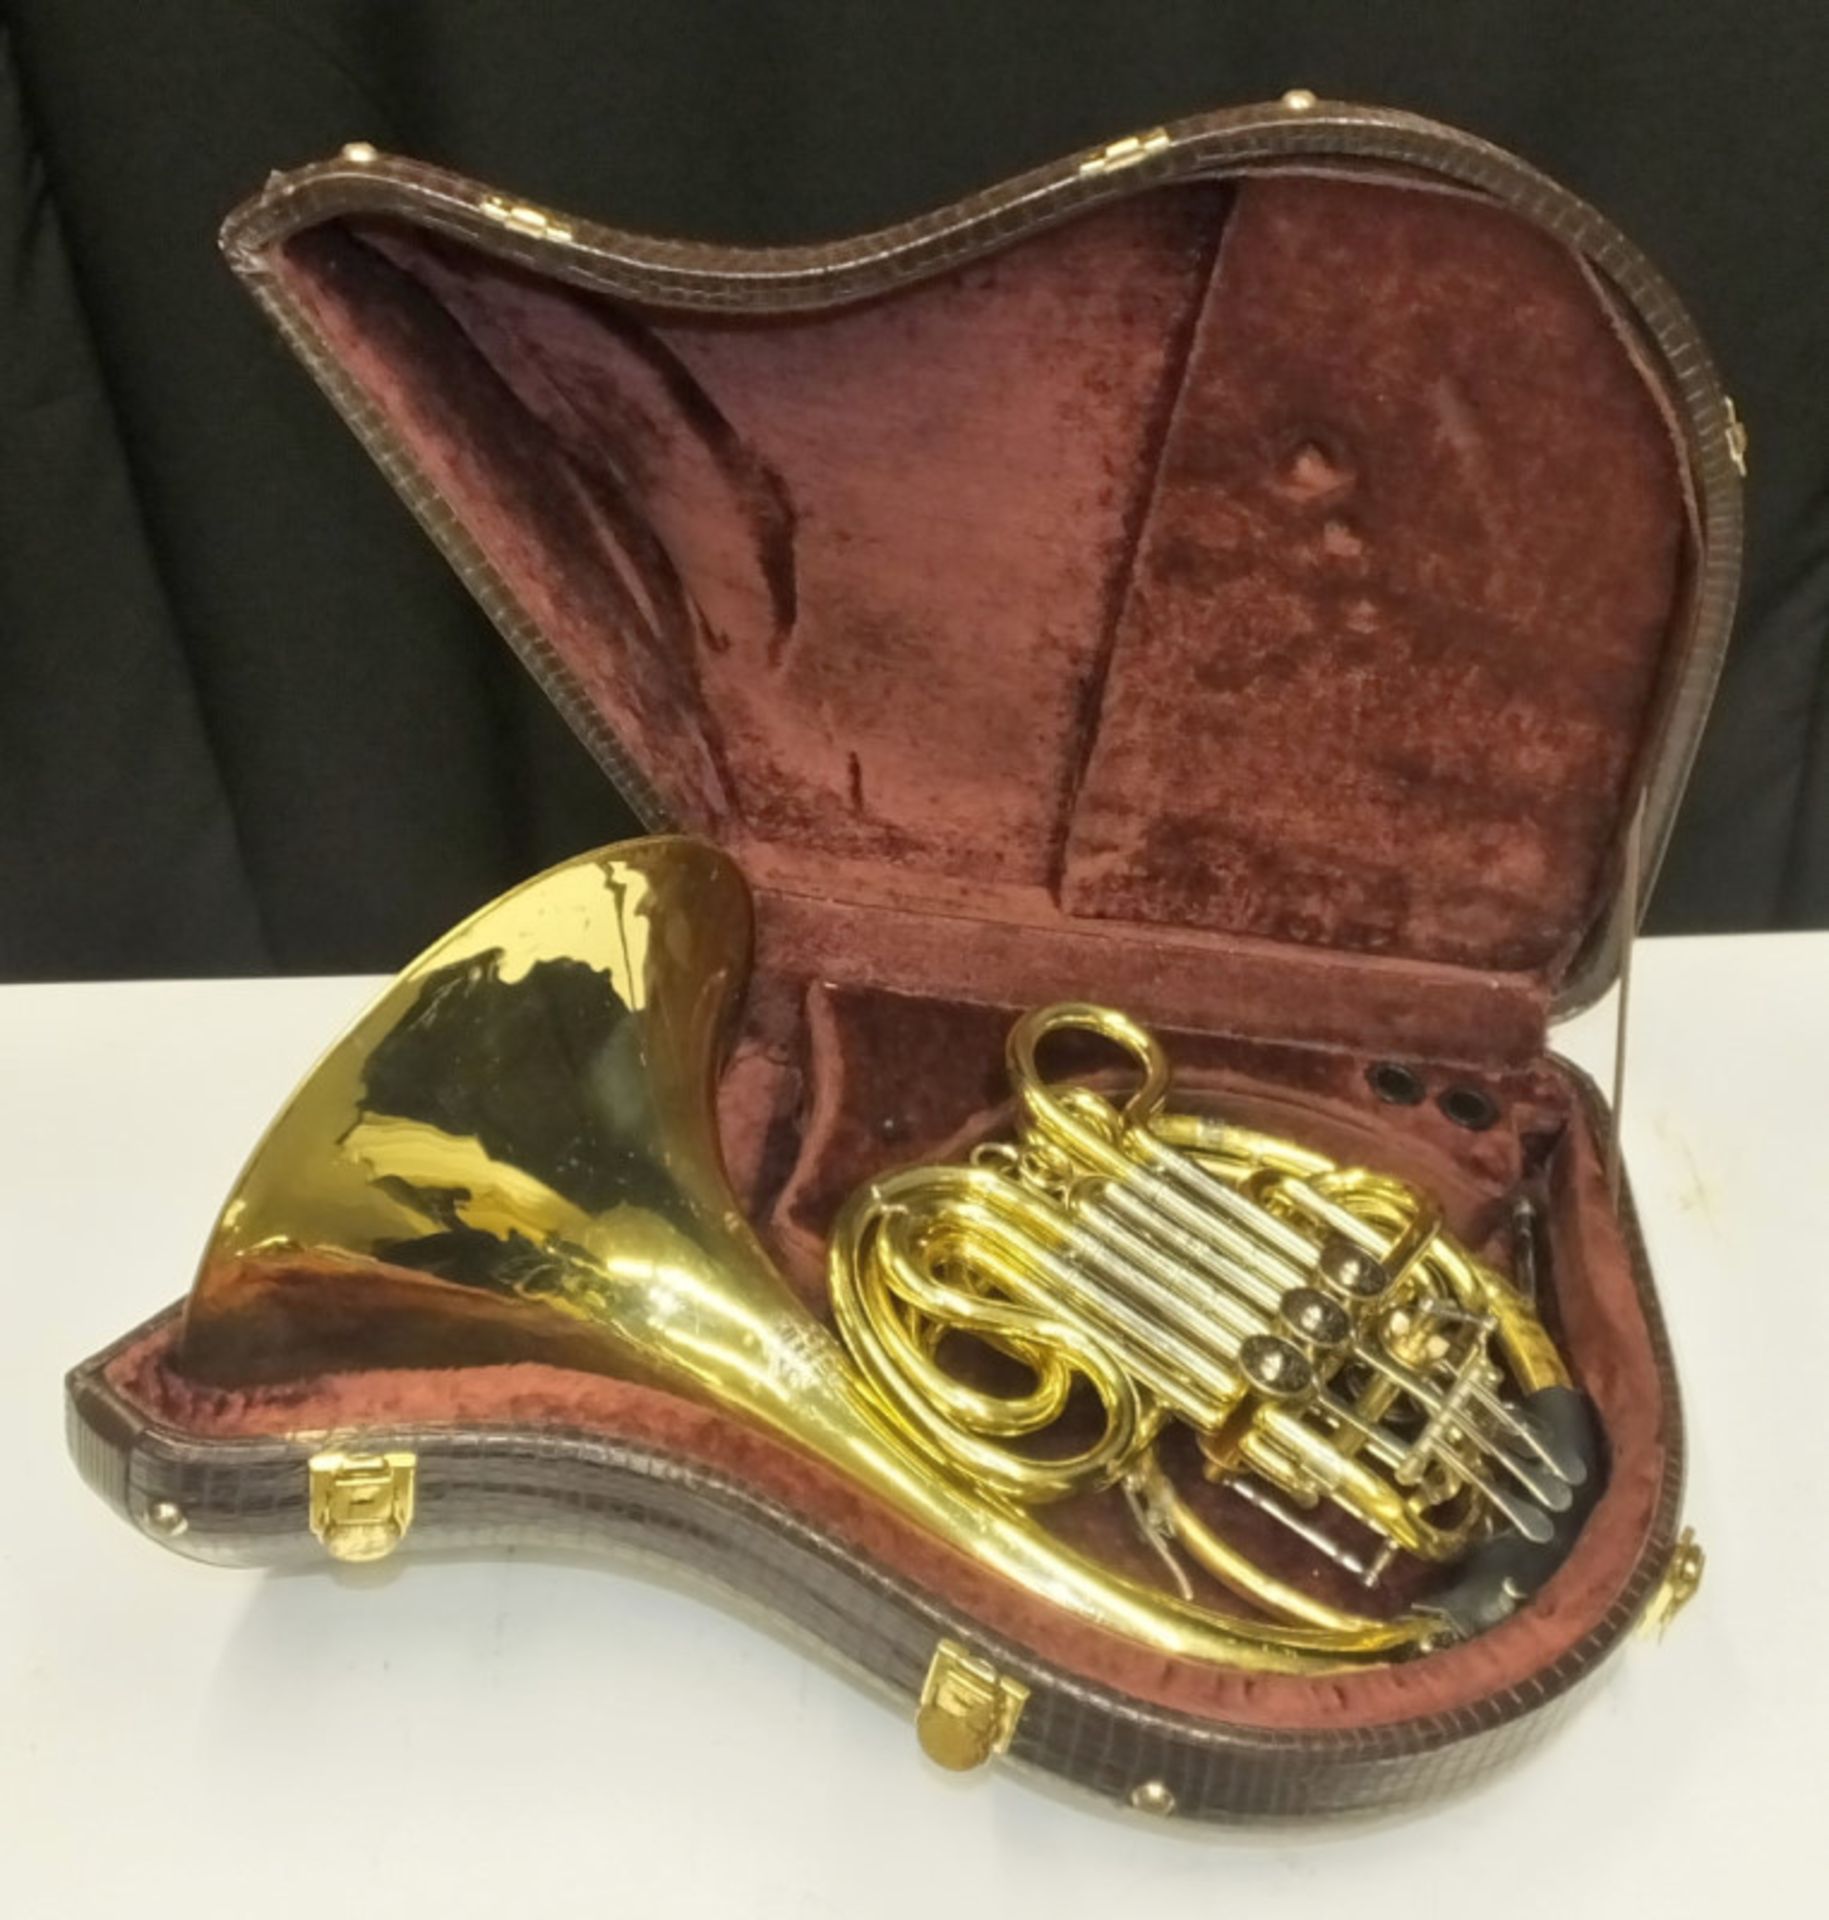 Gebr Alexander Mainz Mod 103 French Horn in case - Serial Number - 16104.